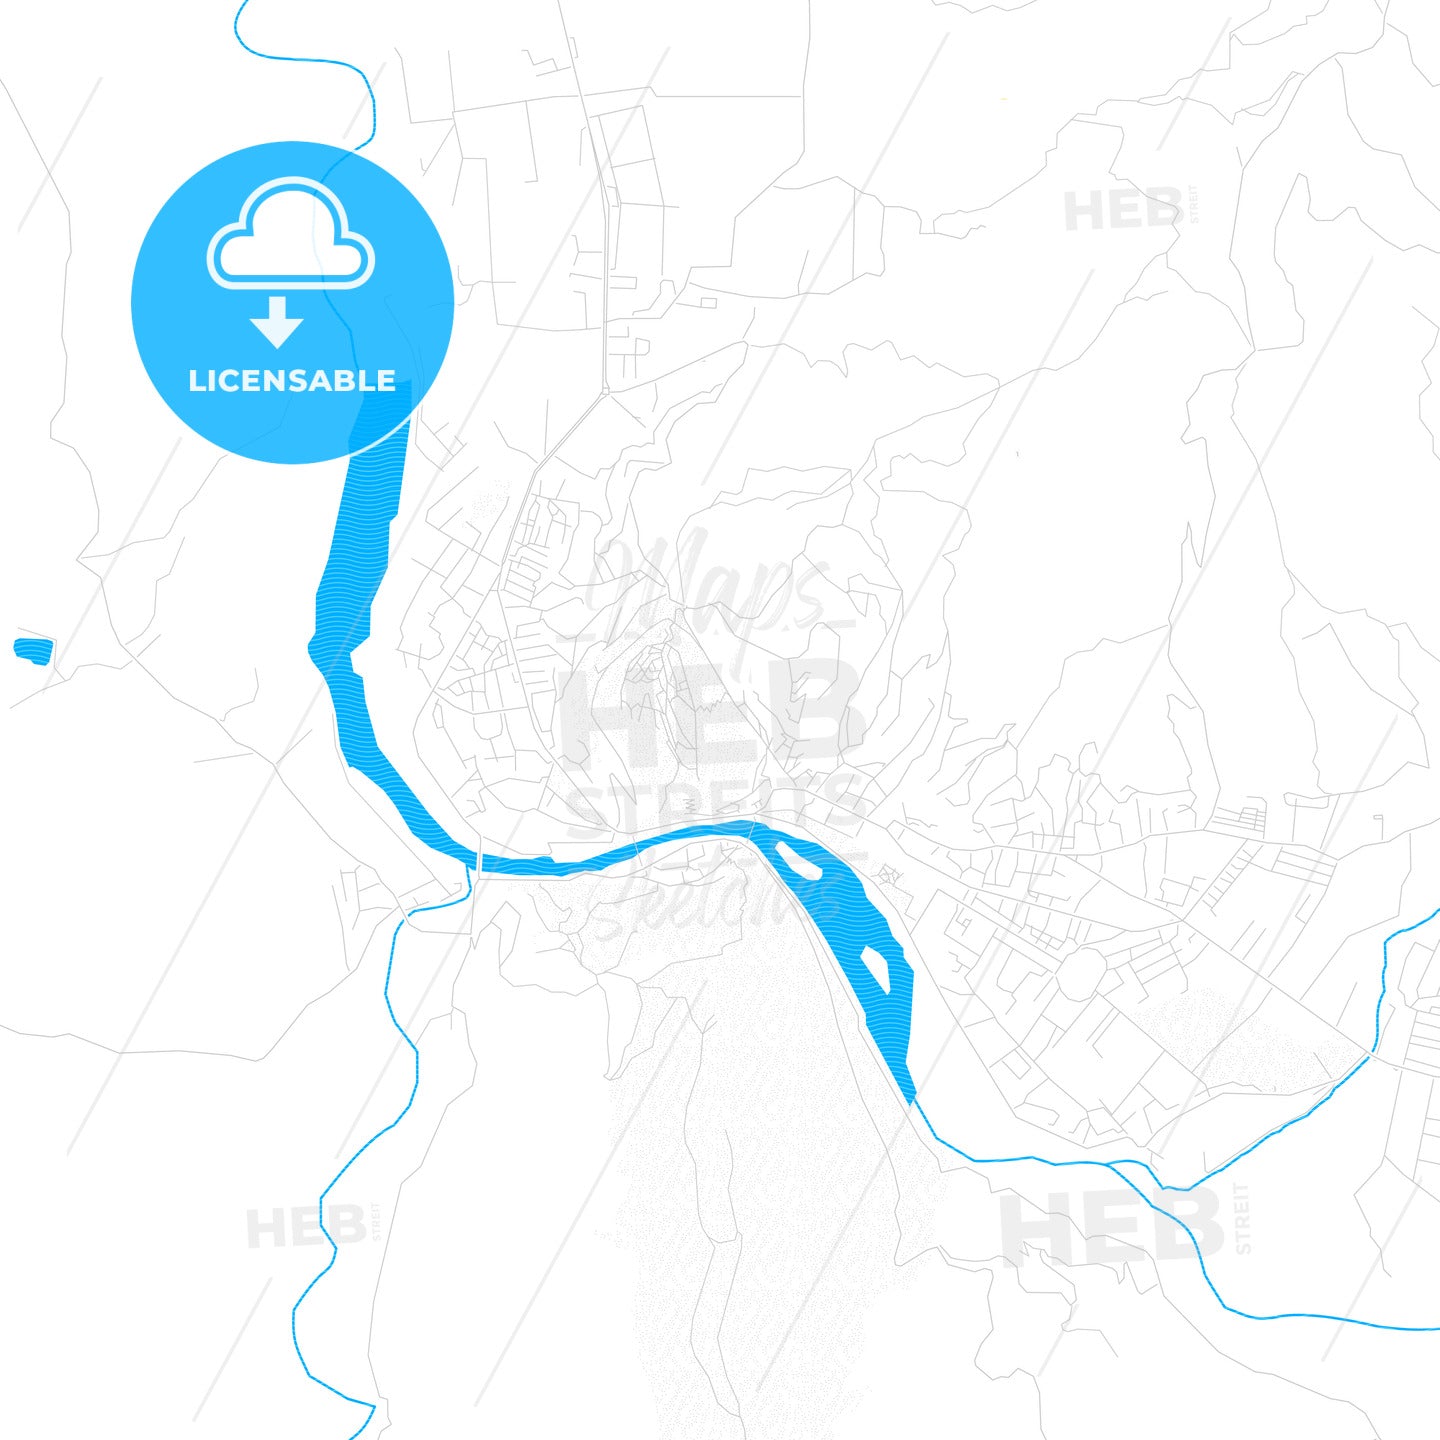 Berat, Albania PDF vector map with water in focus